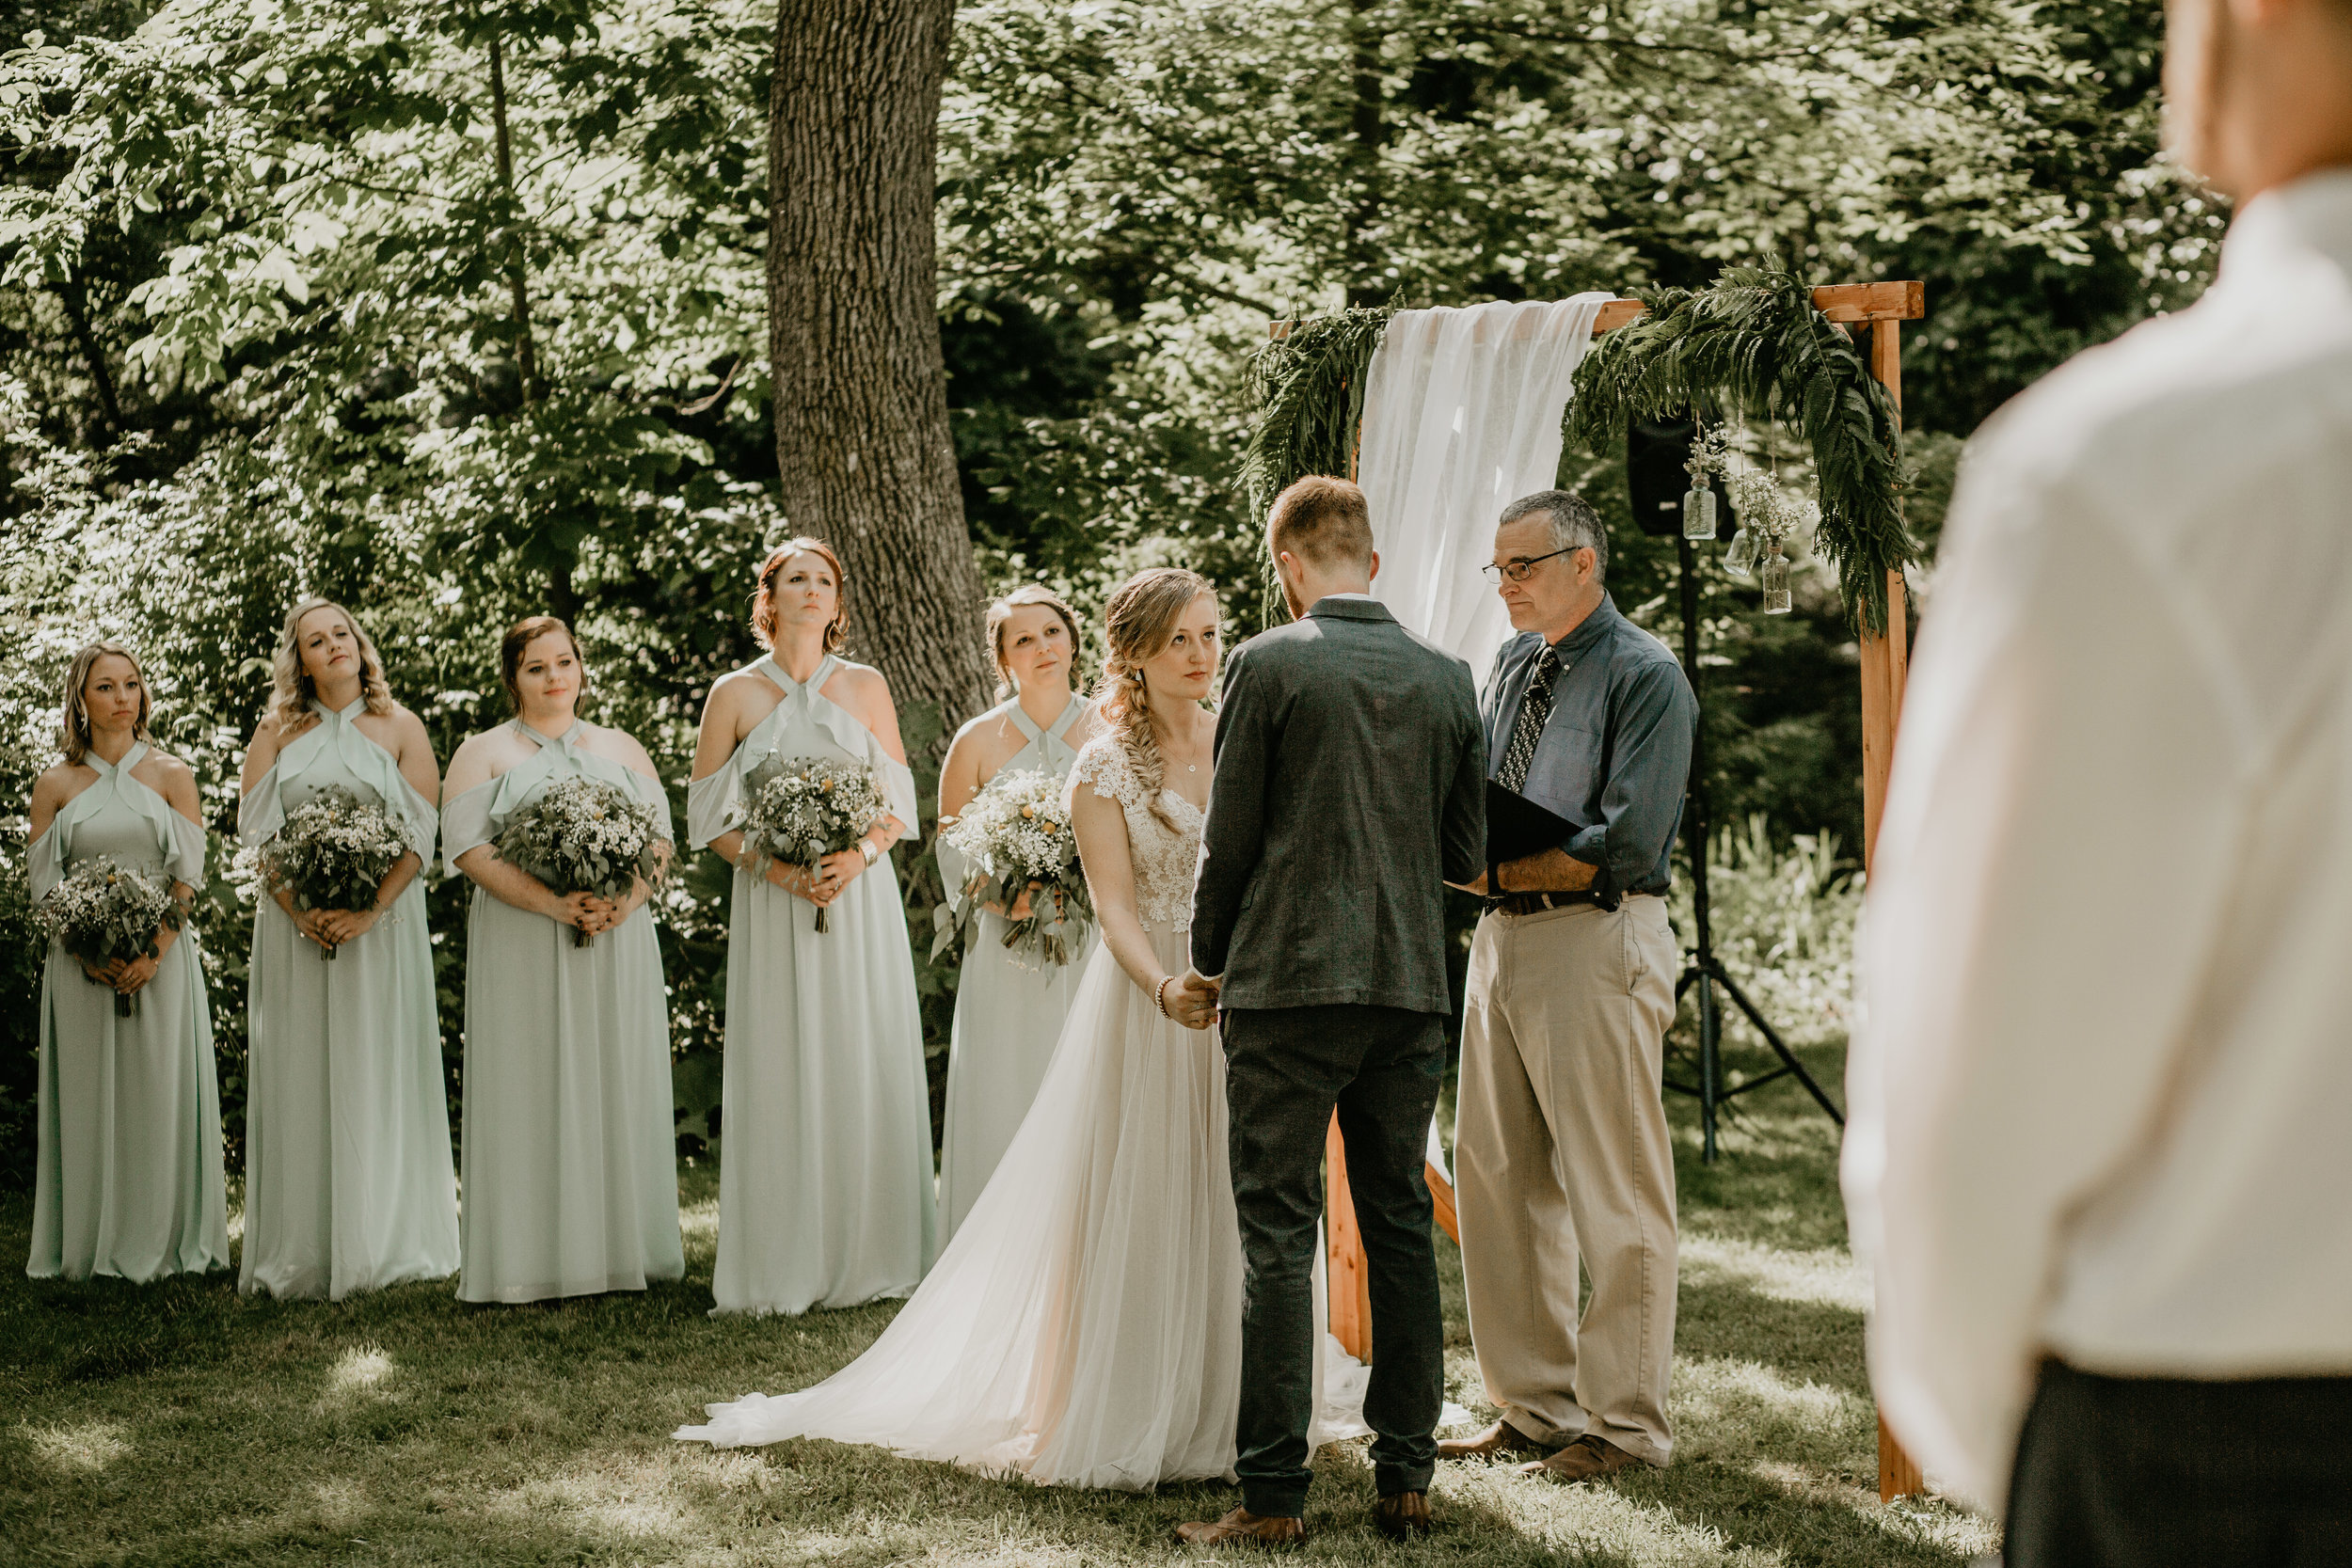 Nicole-Daacke-Photography-pennsylvania-laid-back-outside-backyard-wedding-family-summer-june-maryland-barefoot-bride-woodland-trees-sunset-couple-44.jpg